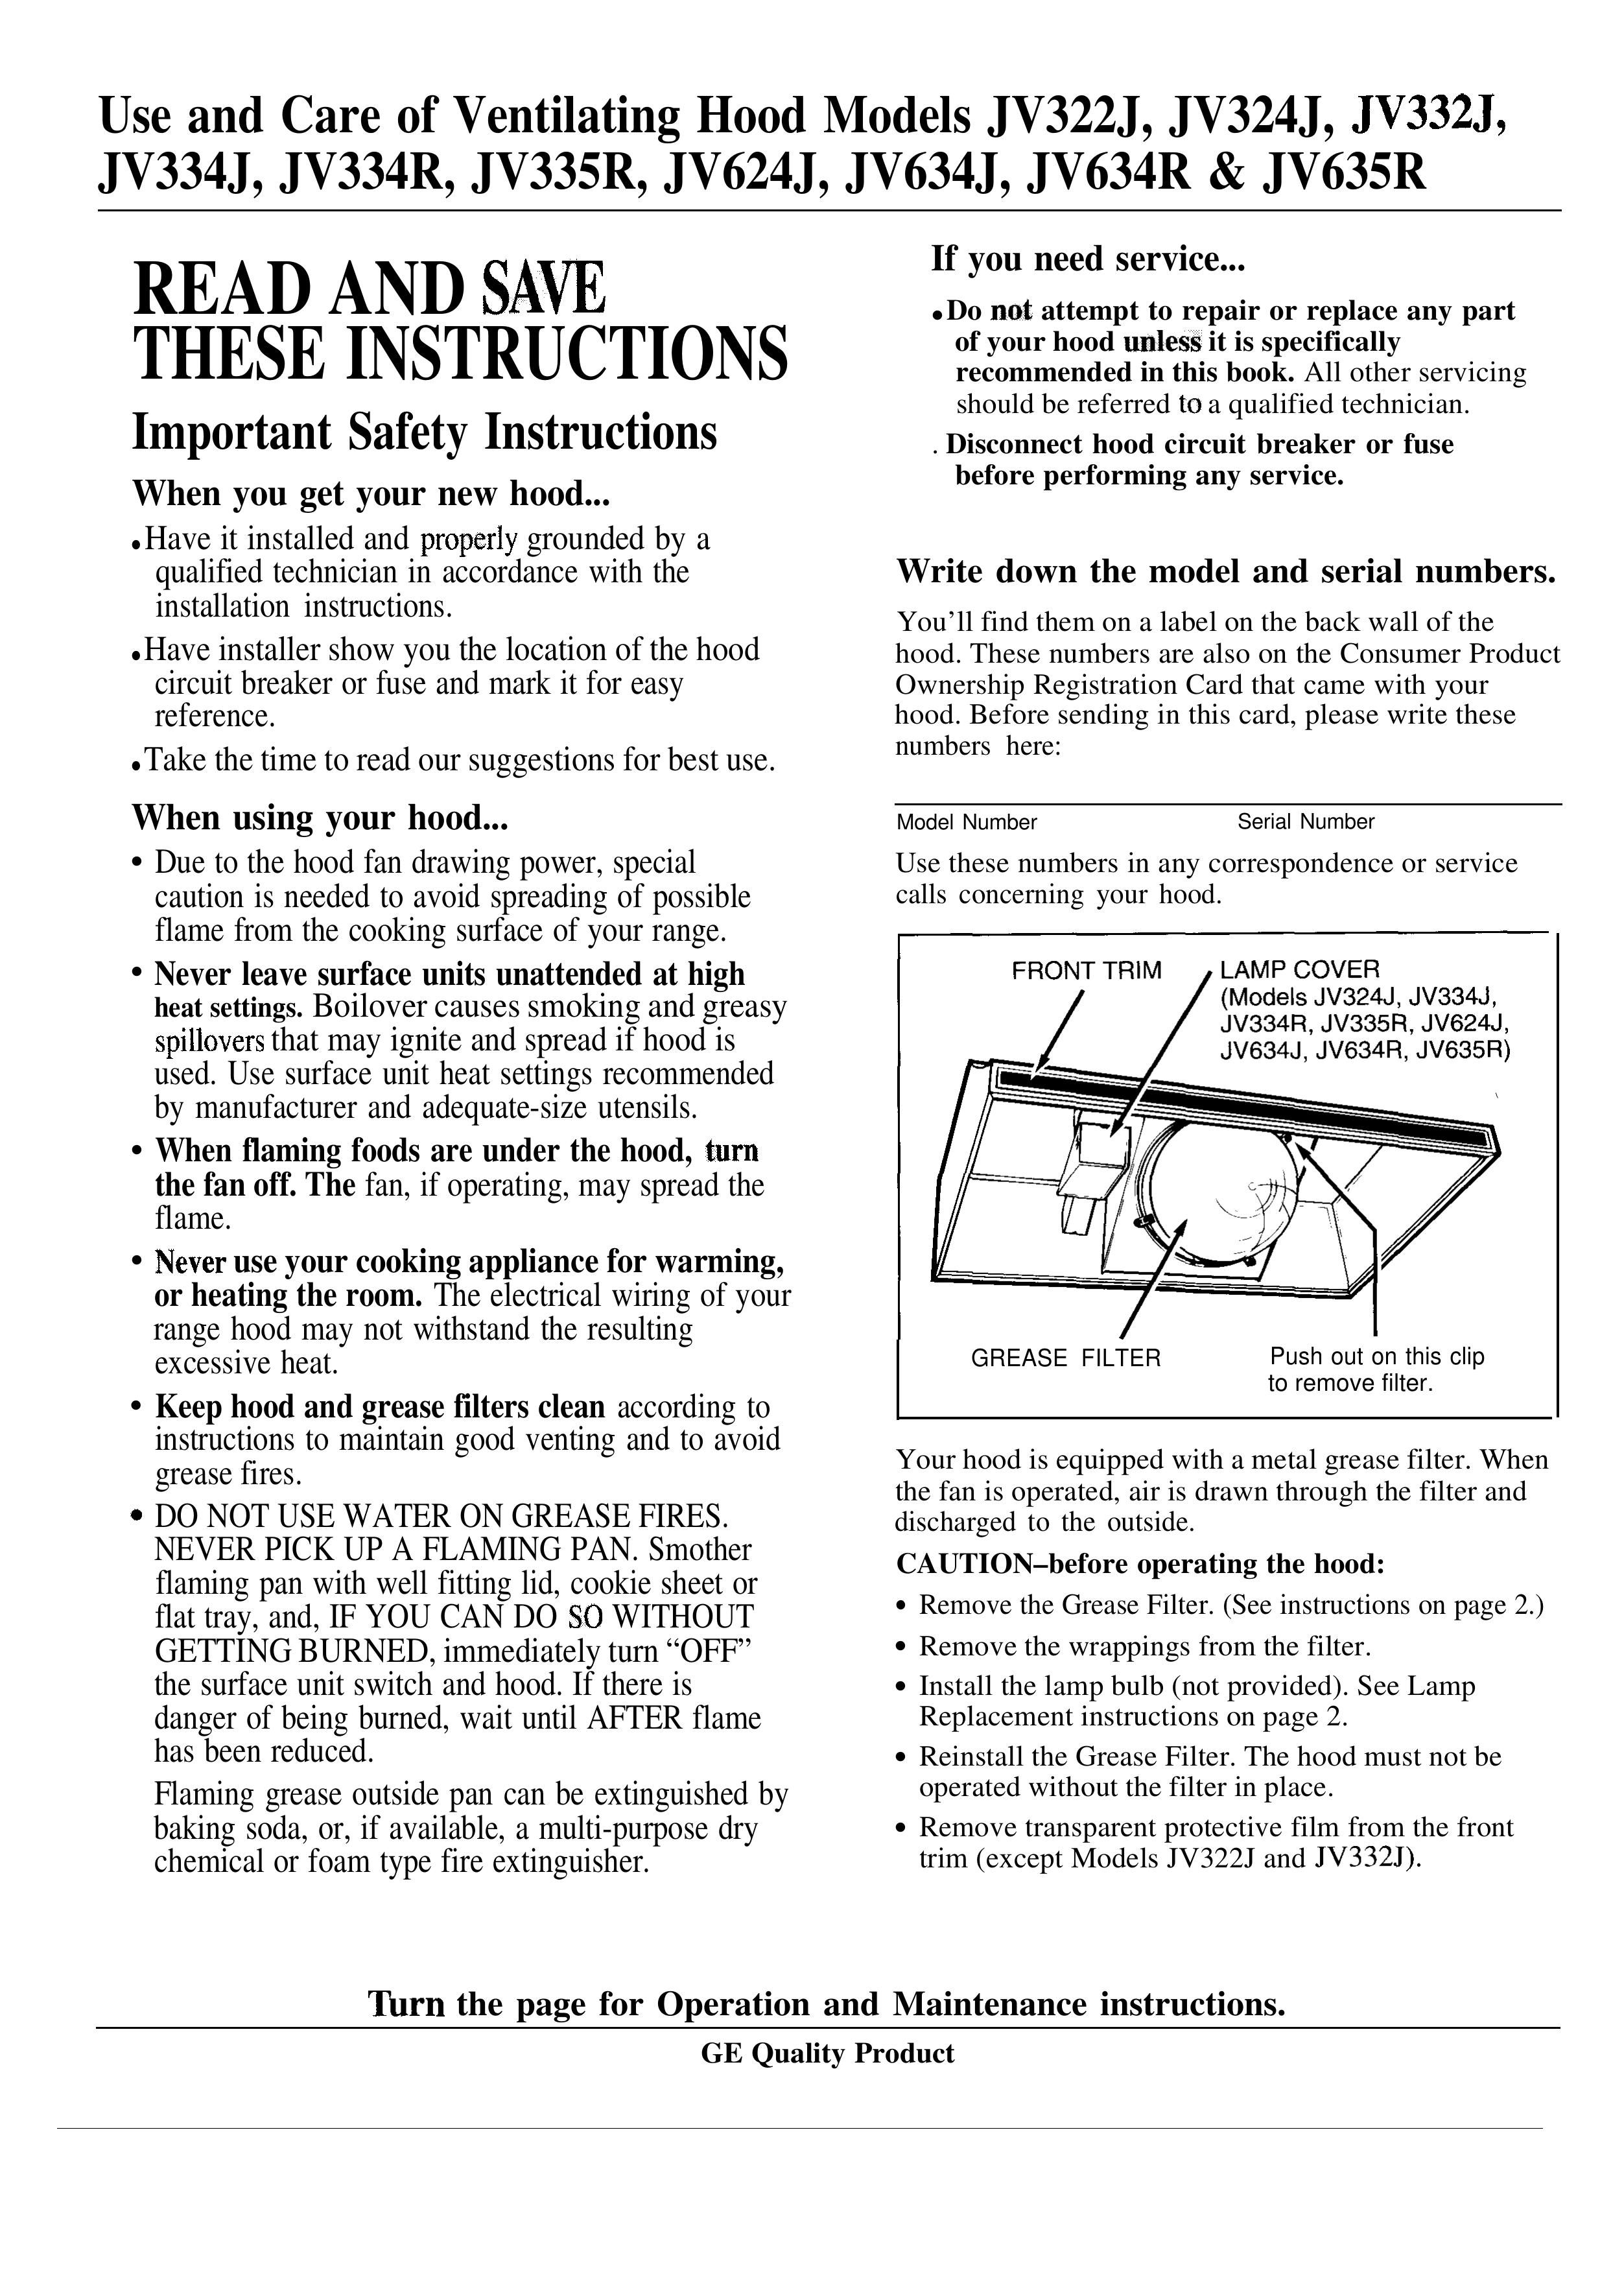 GE JV322J Ventilation Hood User Manual